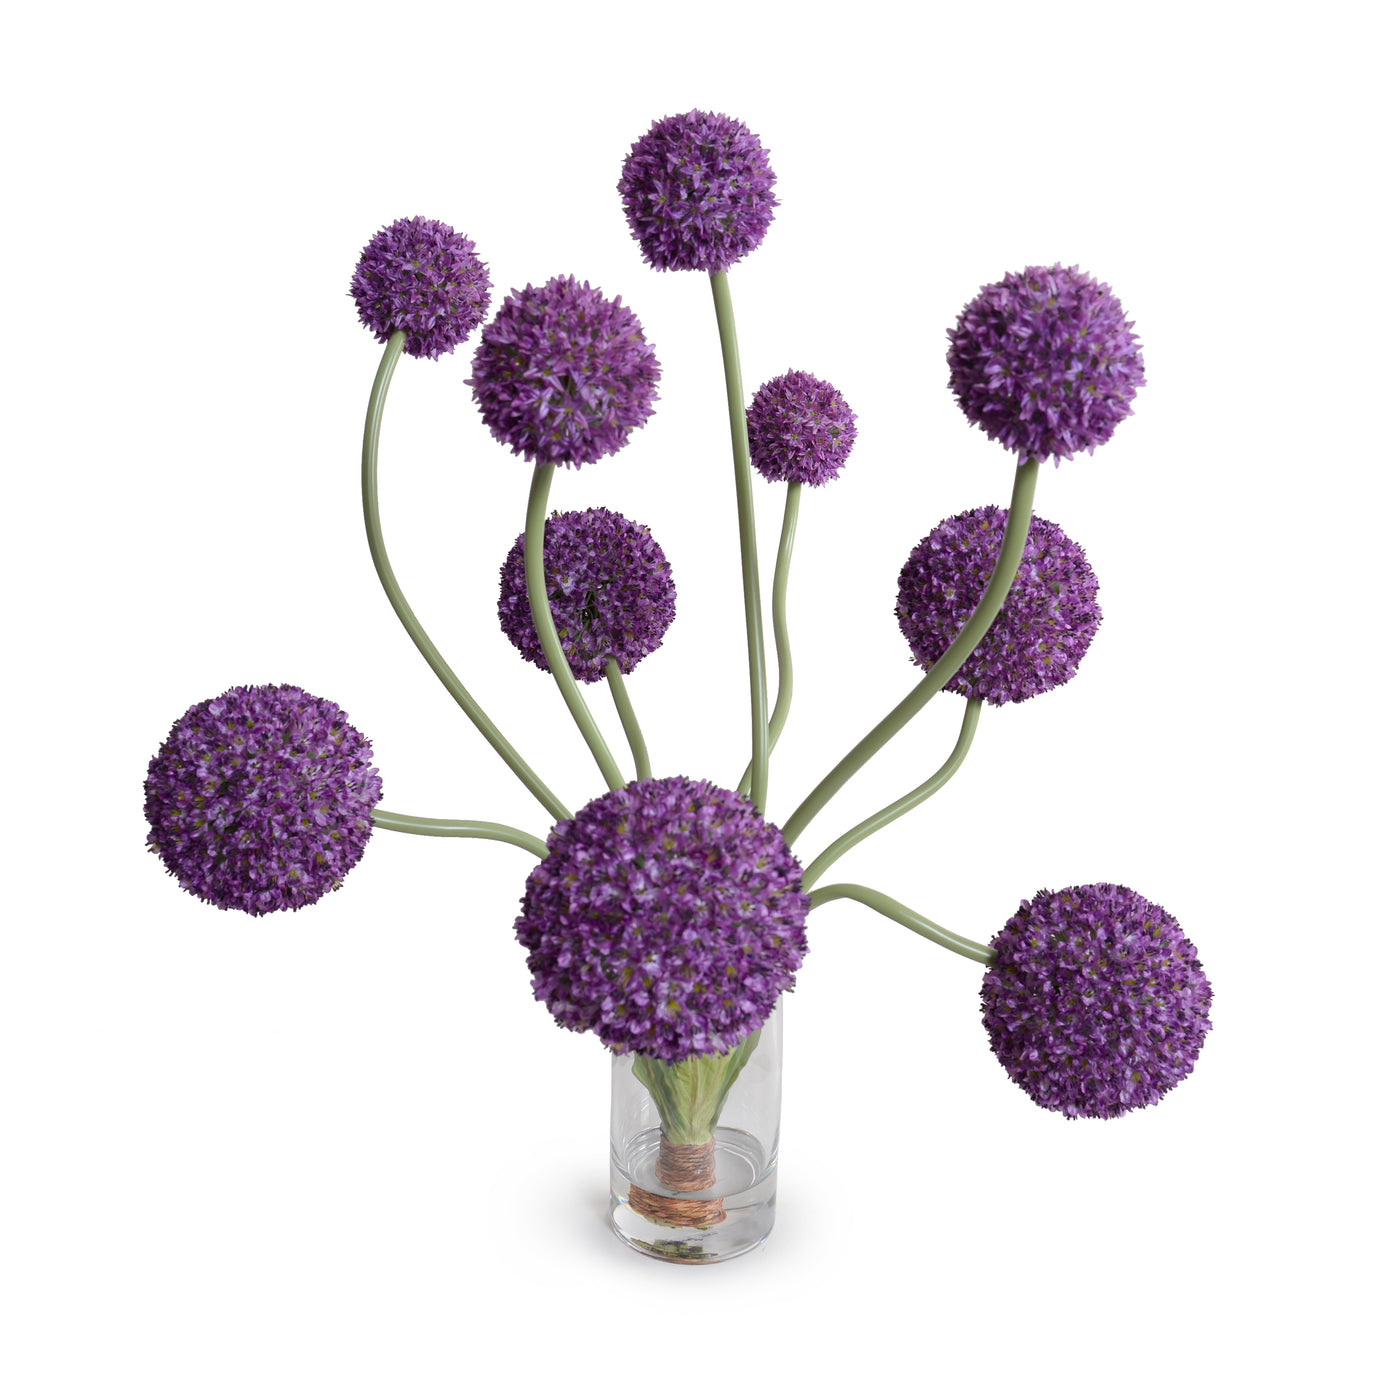 Allium Arrangement in Glass 32"H - Med/Lg Flowers